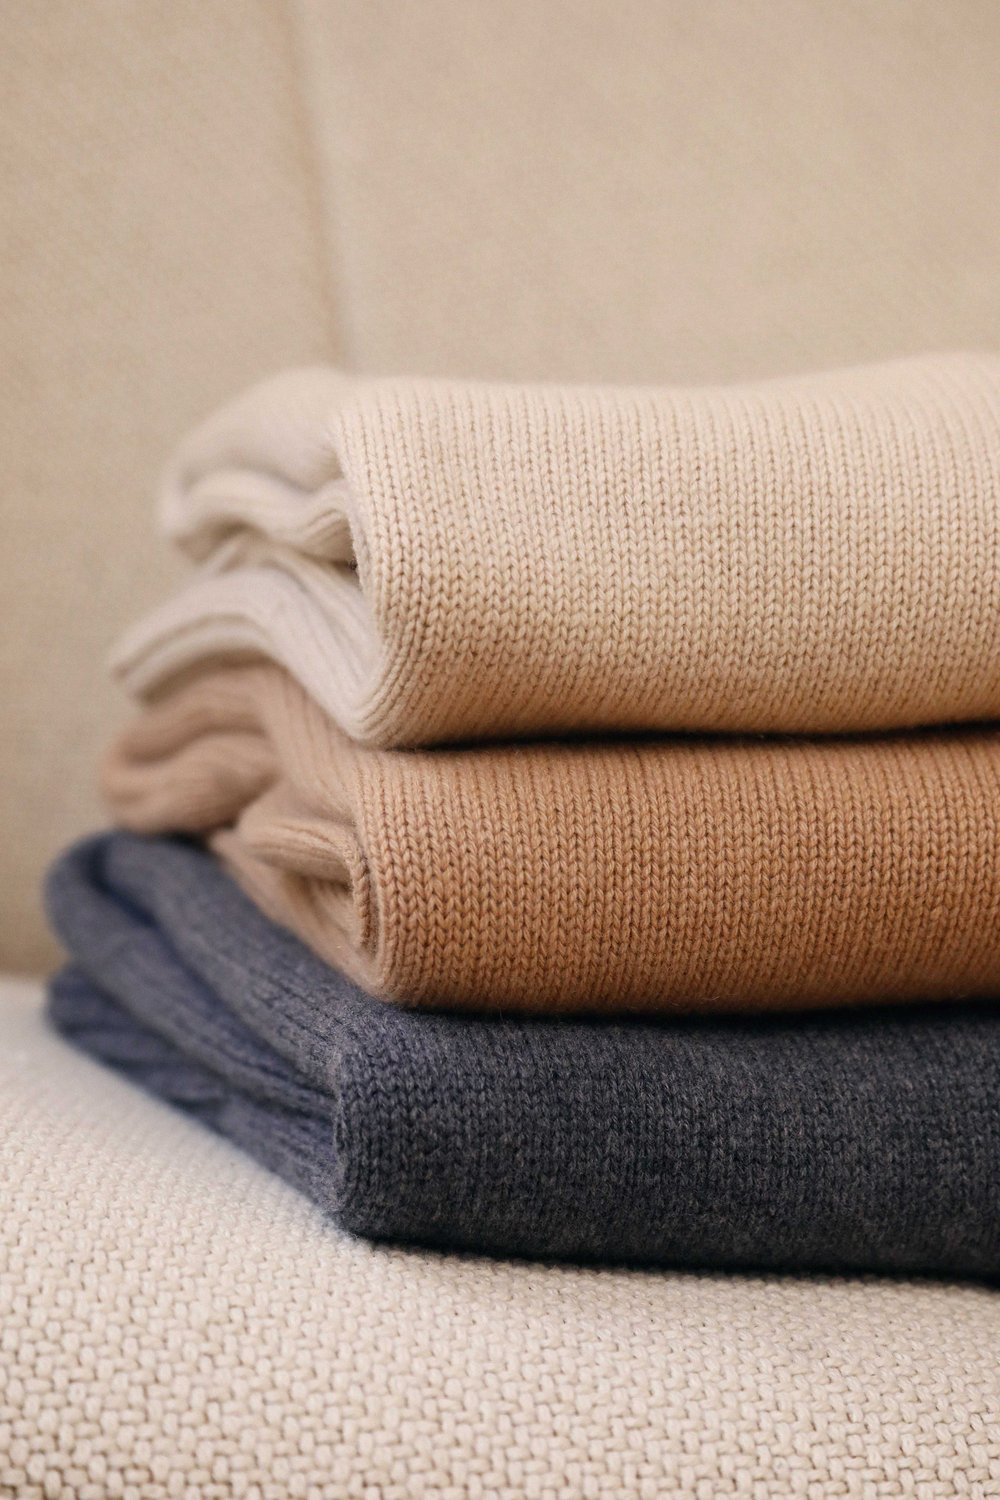 Knitwear — Rosae Paris